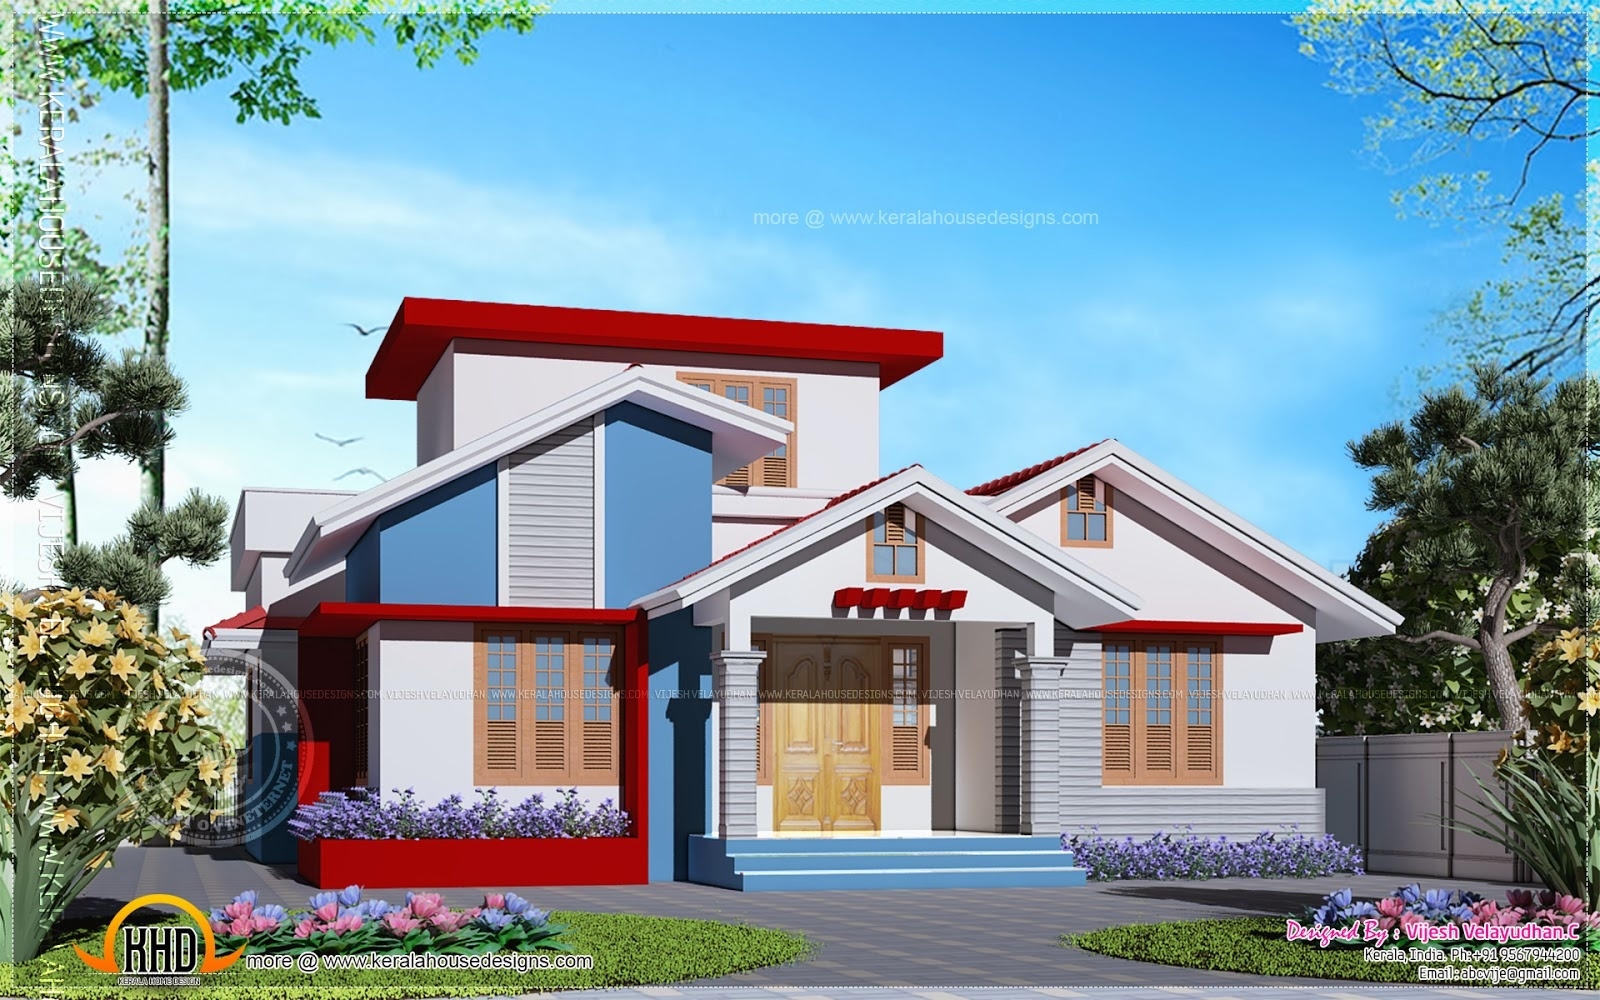 Classy kerala home design single floor kerala home design and floor plans pertaining to outstanding kerala single floor house elevation